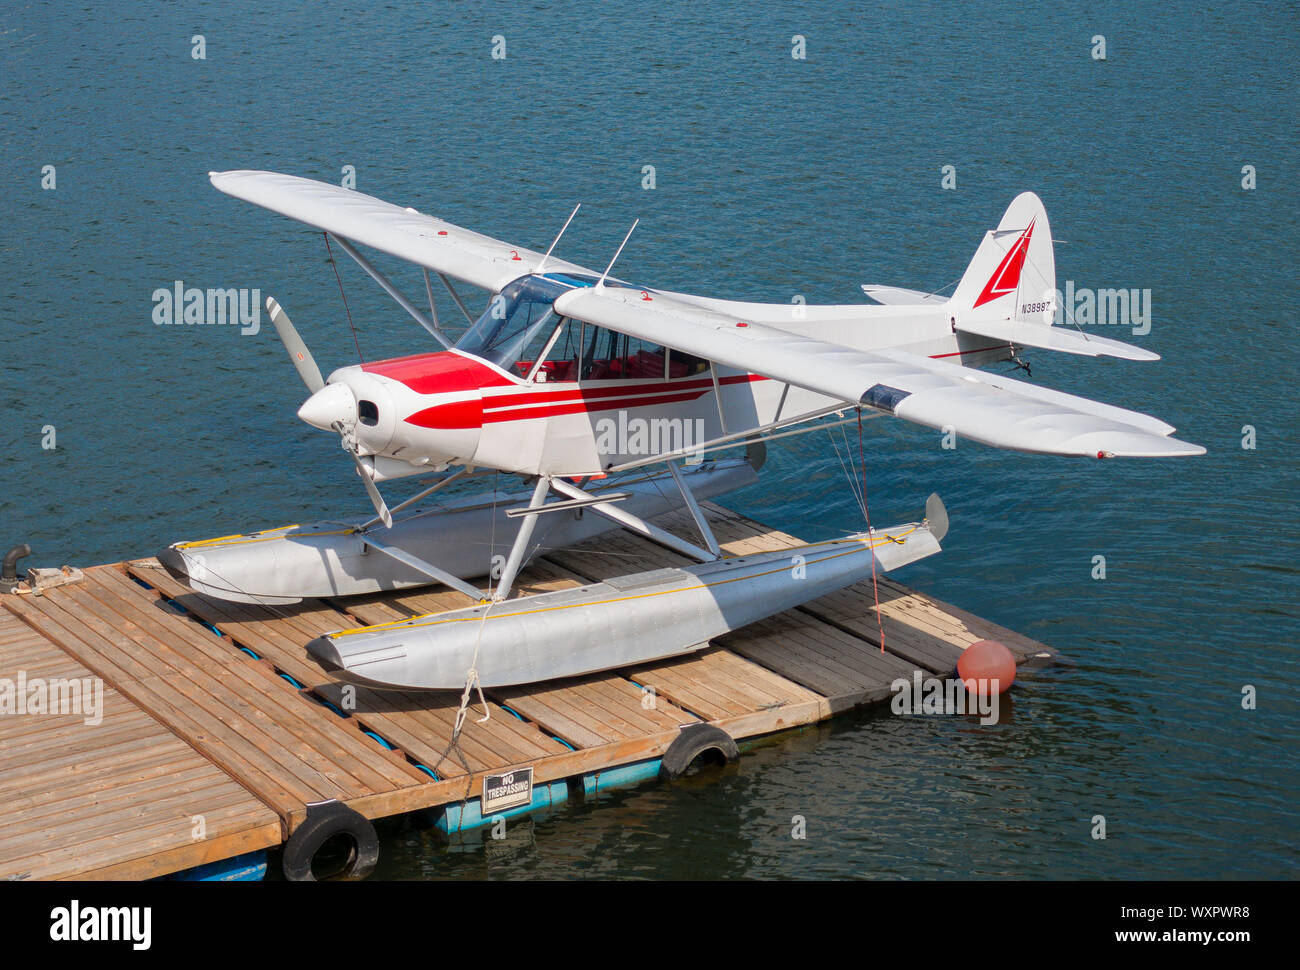 HOOD River, Oregon, USA - Wasserflugzeug im Marina am Columbia River angedockt. Stockfoto